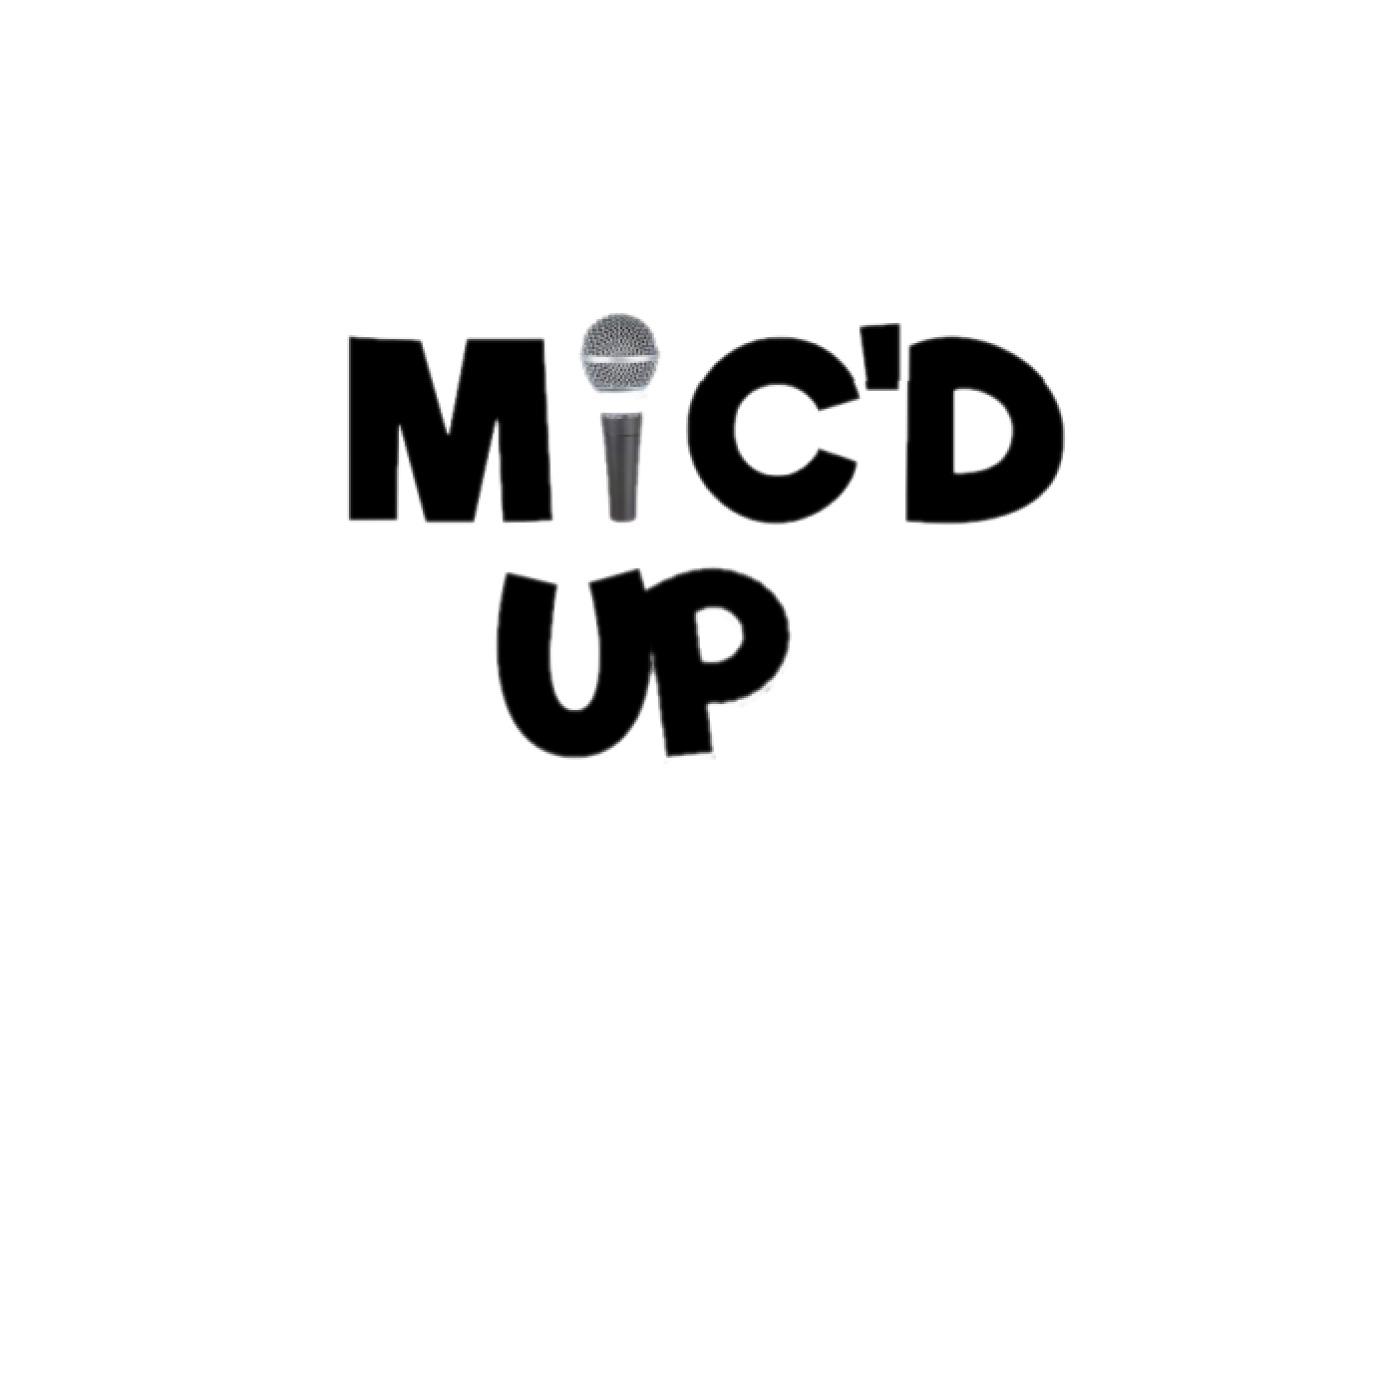 Mic'd Up